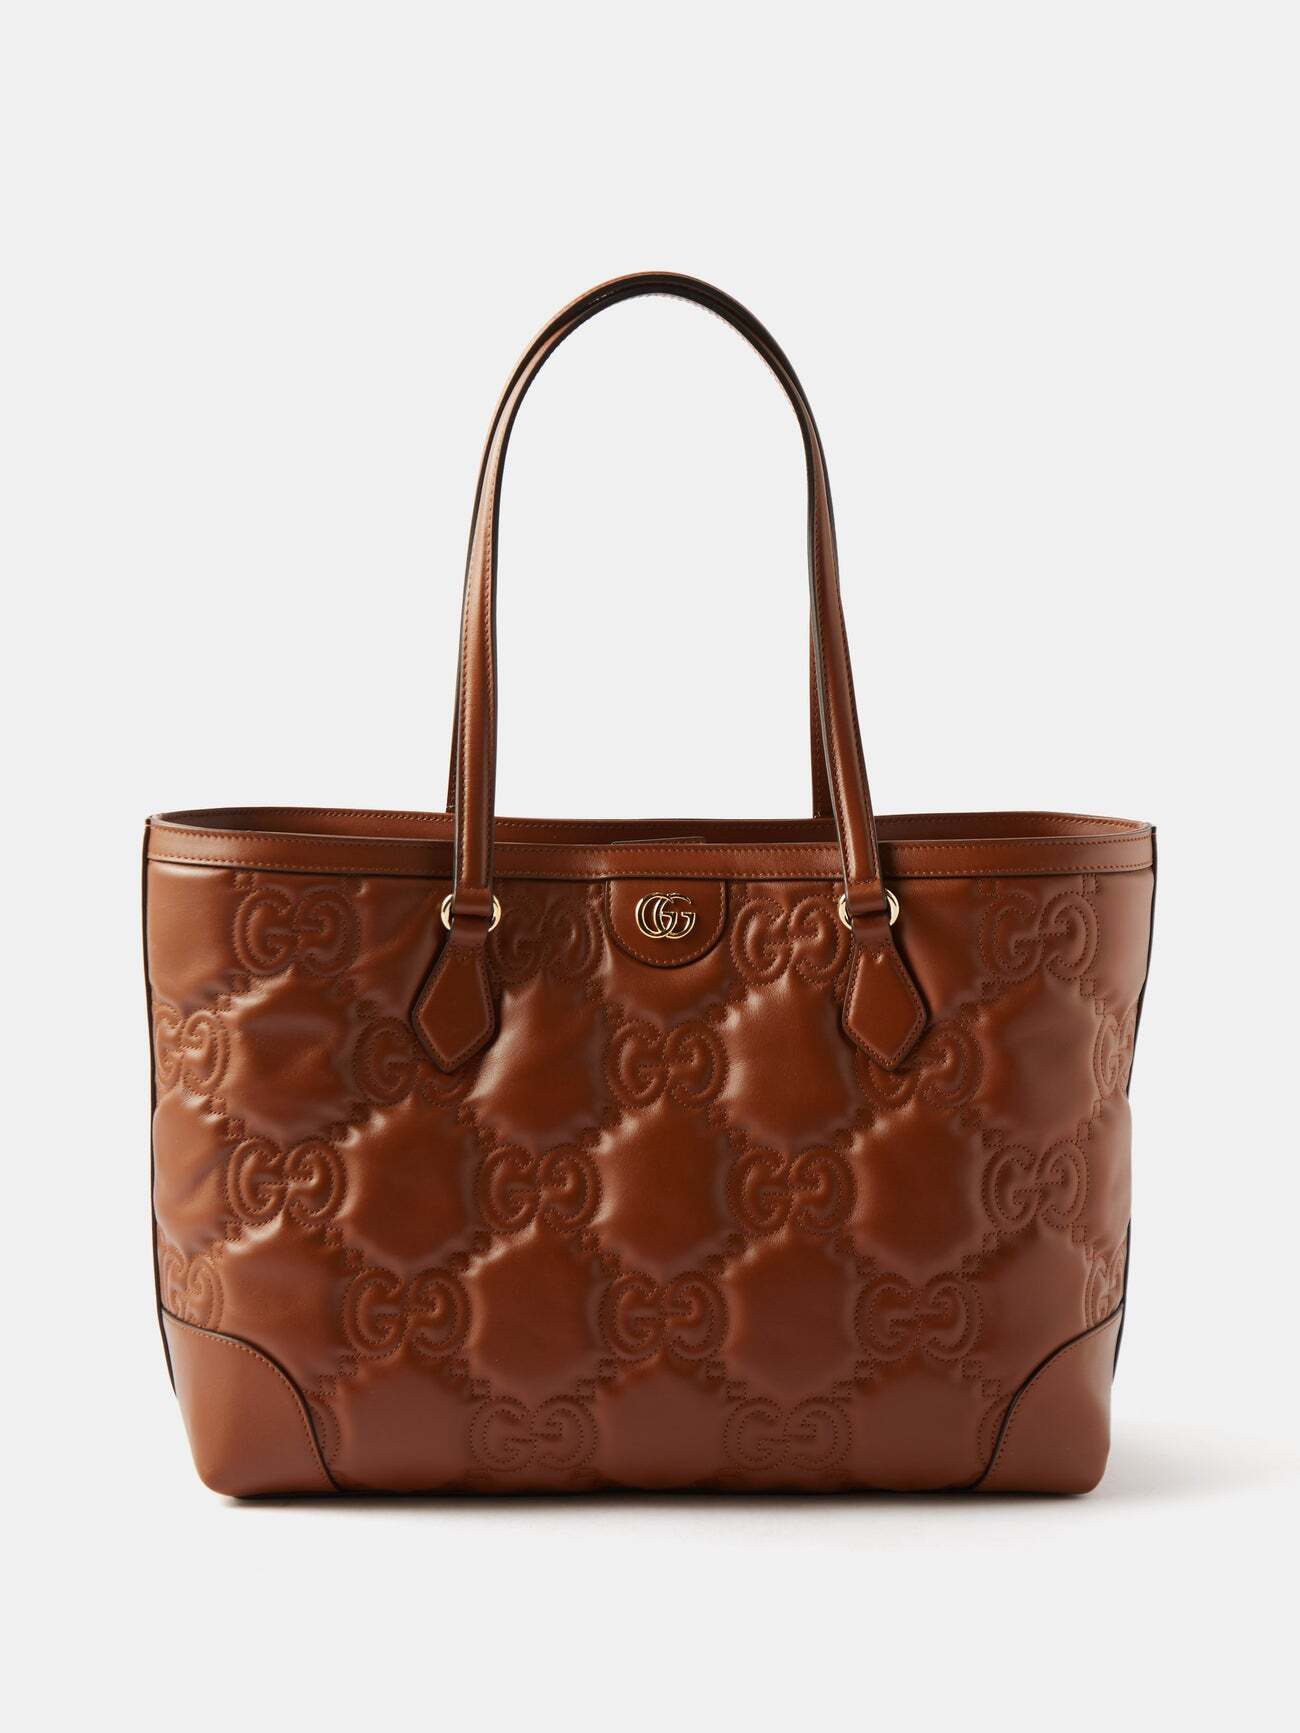 Gucci - GG-matelassé Leather Tote Bag - Womens - Tan